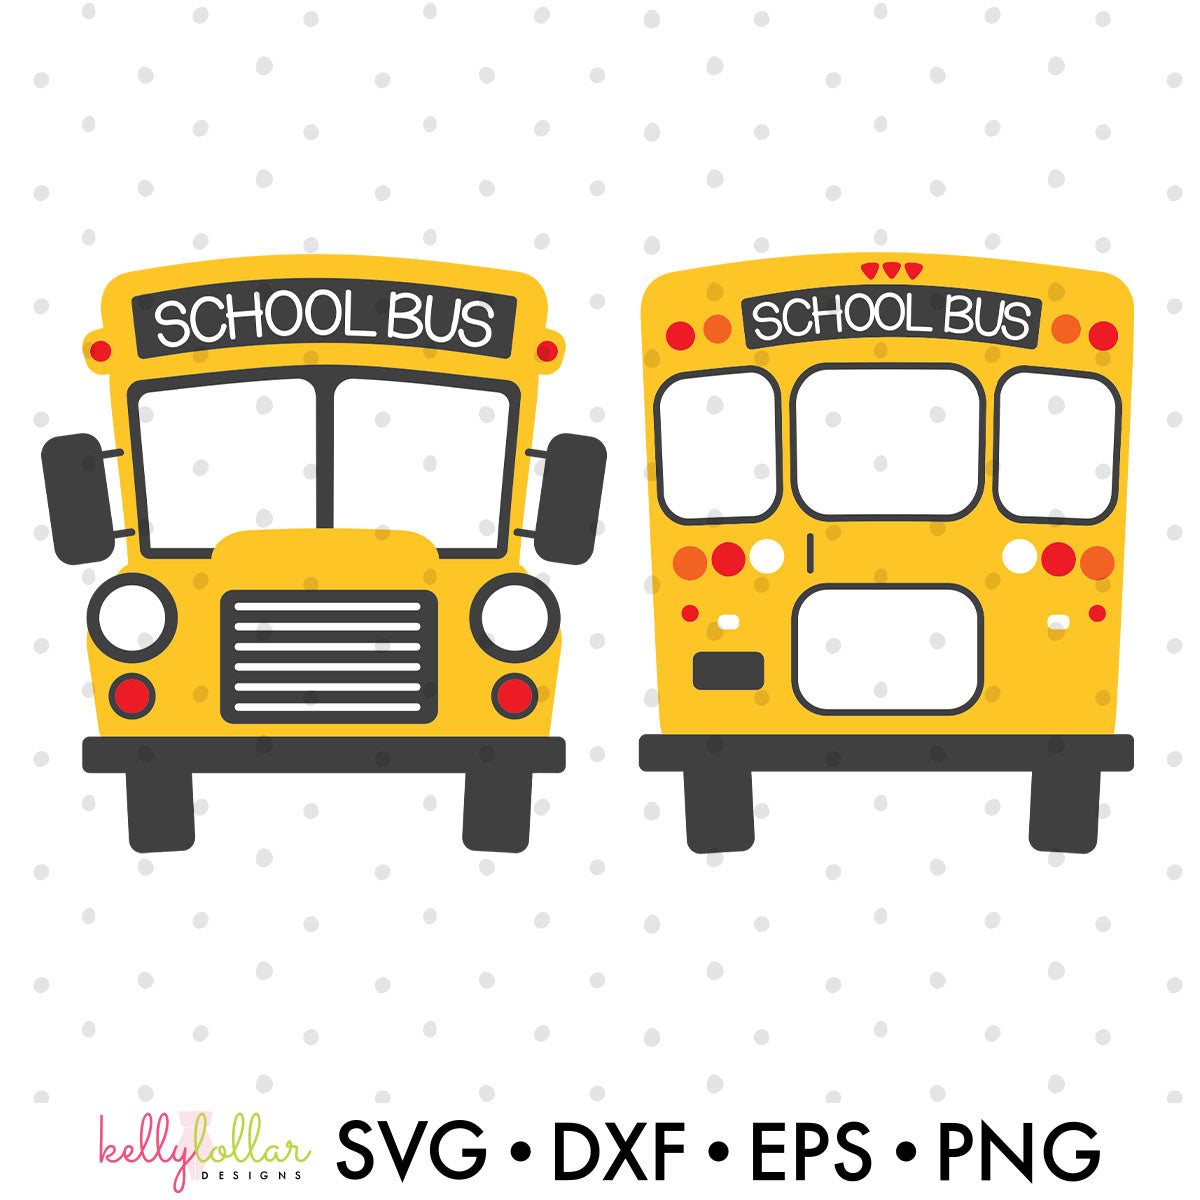 School Bus | SVG DXF EPS PNG Cut Files